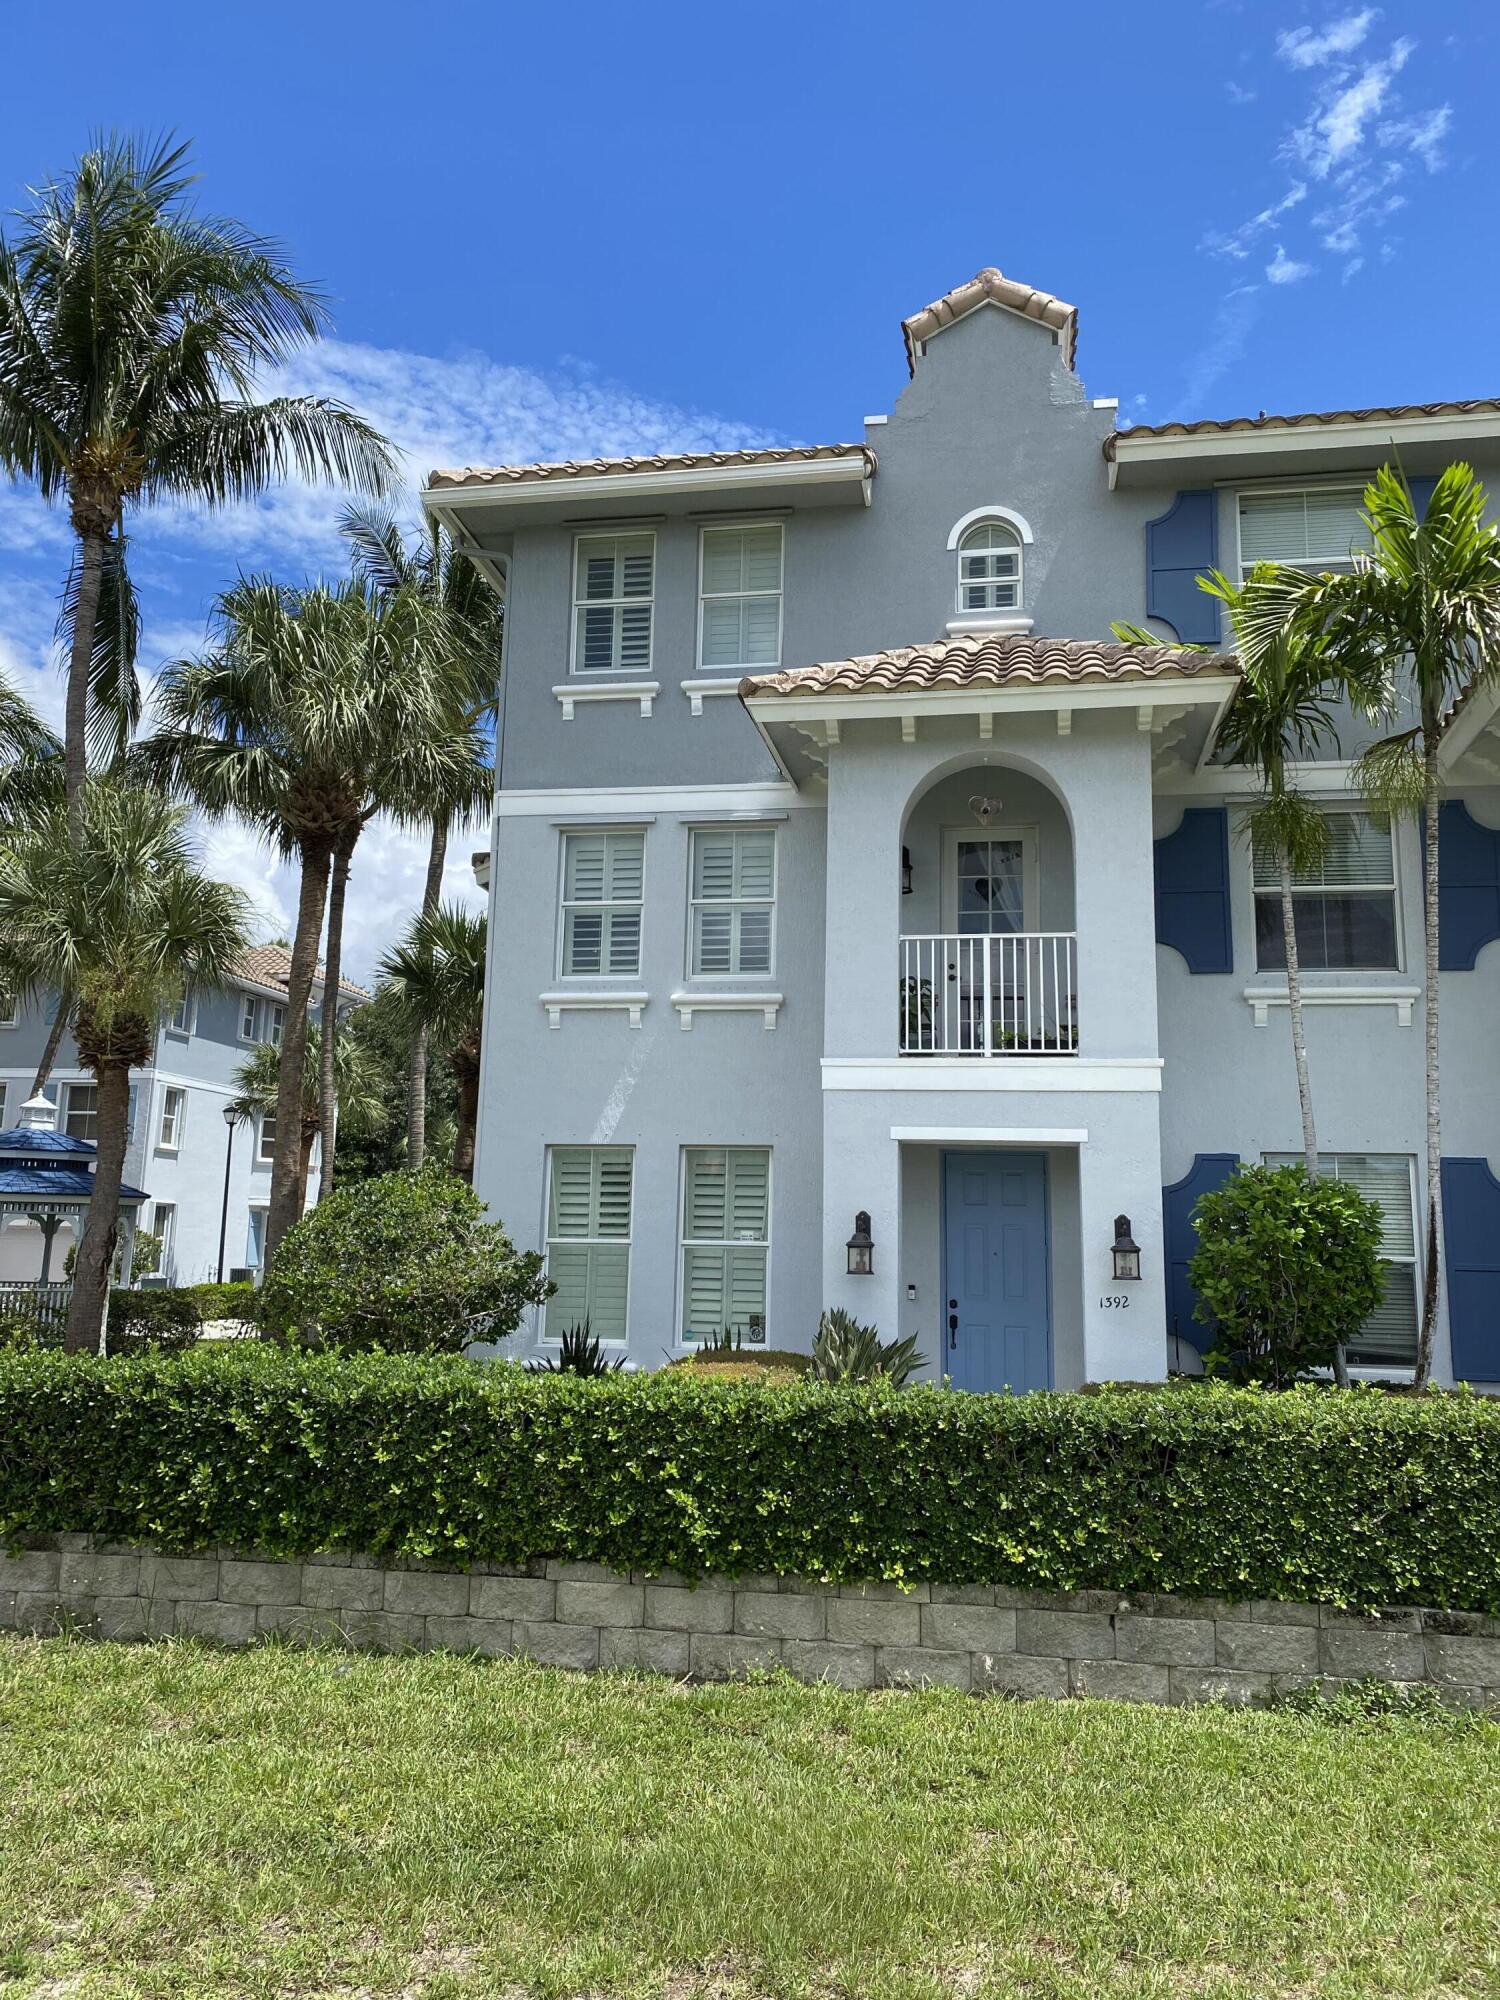 Property for Sale at 1392 Piazza Delle Pallottole, Boynton Beach, Palm Beach County, Florida - Bedrooms: 4 
Bathrooms: 3.5  - $465,000